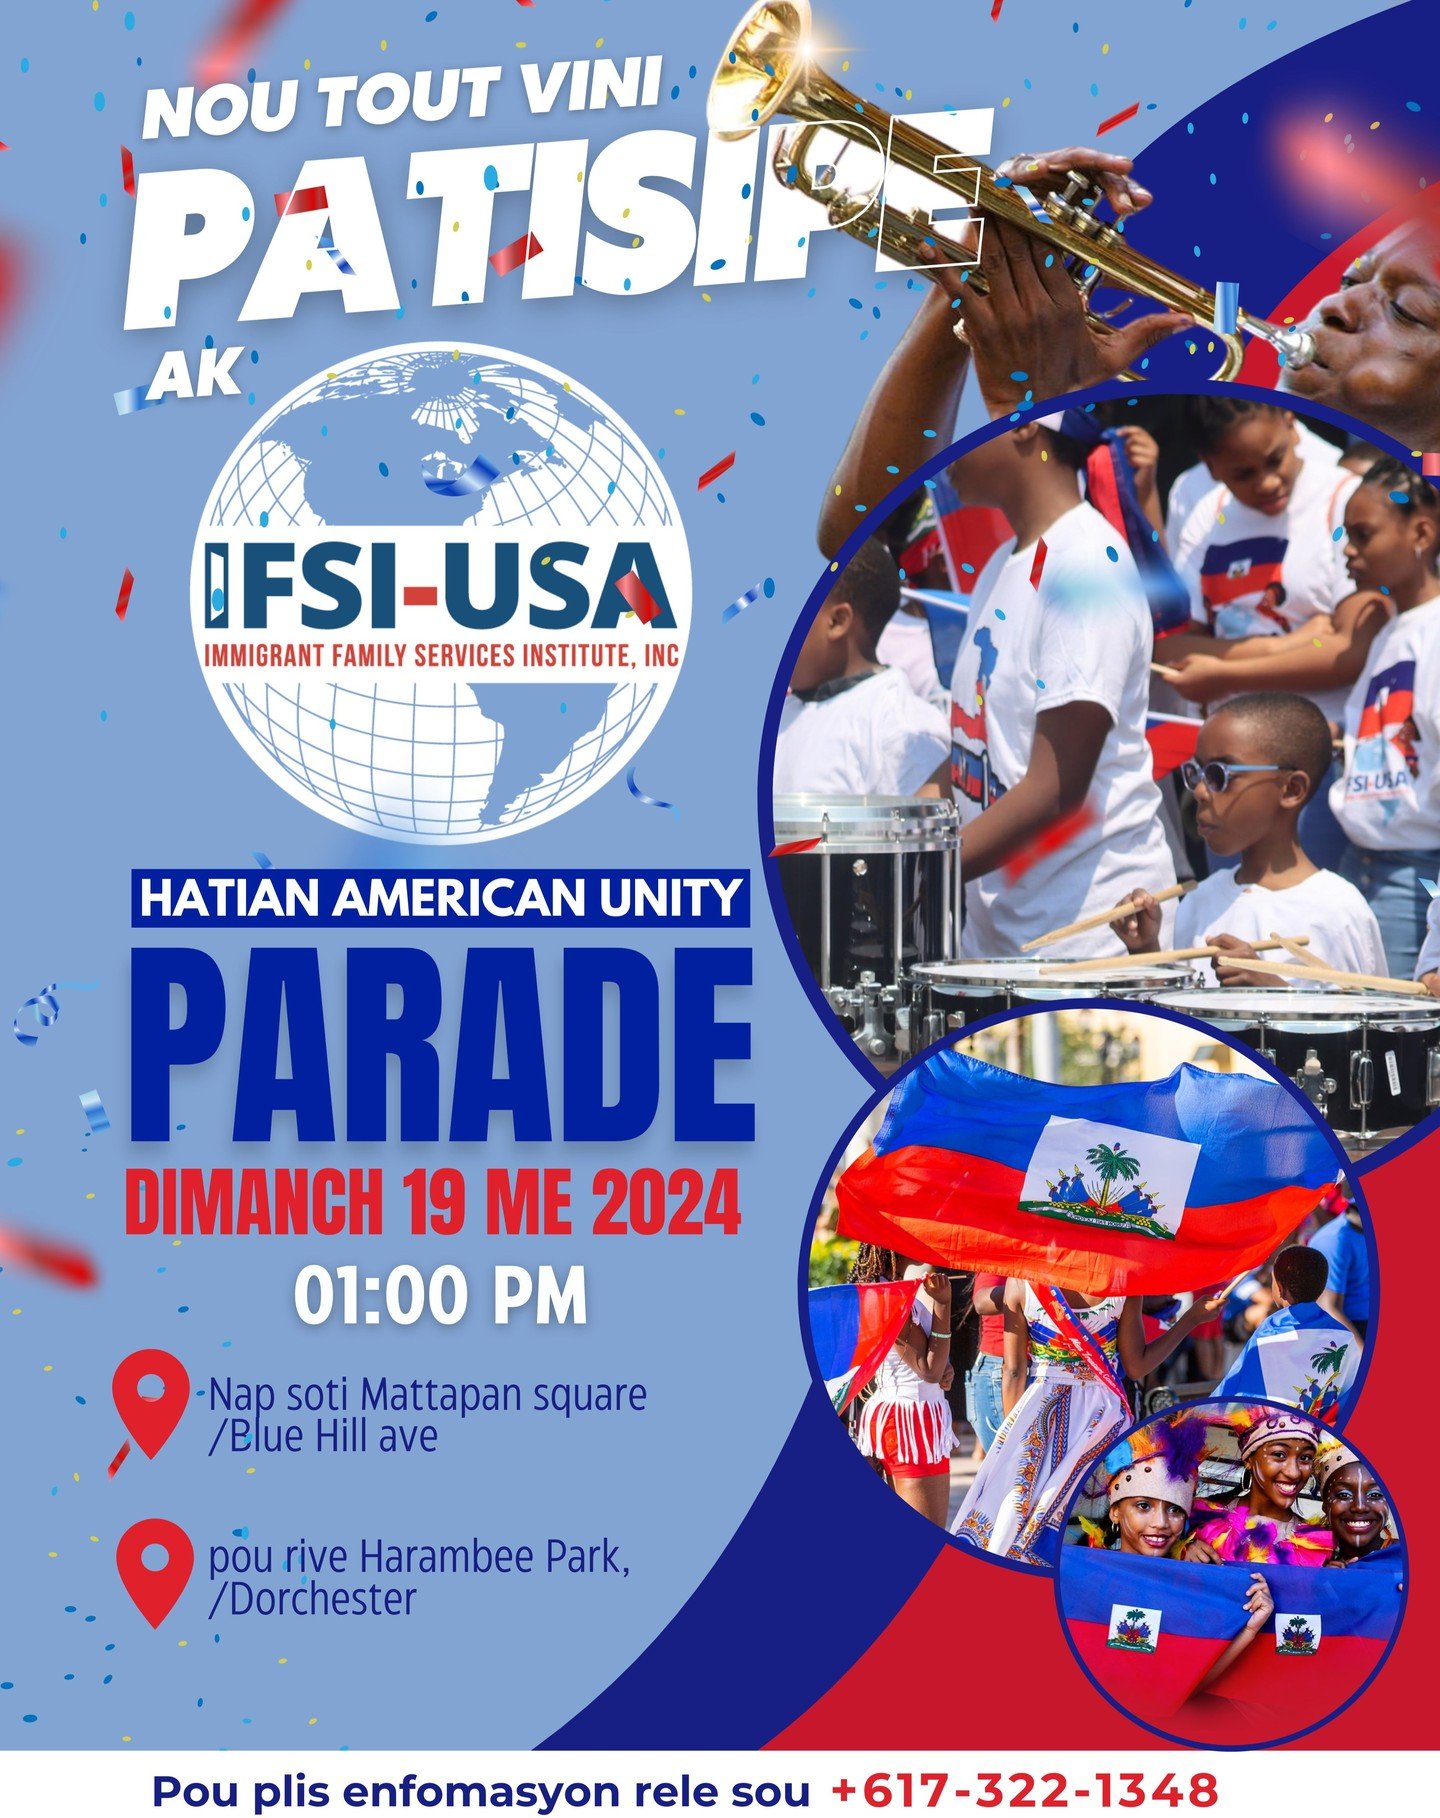 Vini patisipe ak IFSI nan 22e Haitian American Unity Parade. Dimanch 19 Me 2024.
📍 Mattapan Square/ Blue Hill ave - pou rive Harambee Park, 
 Dorchester. 
⏰Nap deplase a 1:00 PM
N ap tann nou !
#parade2024 #hatianheritagemonth2024 #haitianmusic #nou